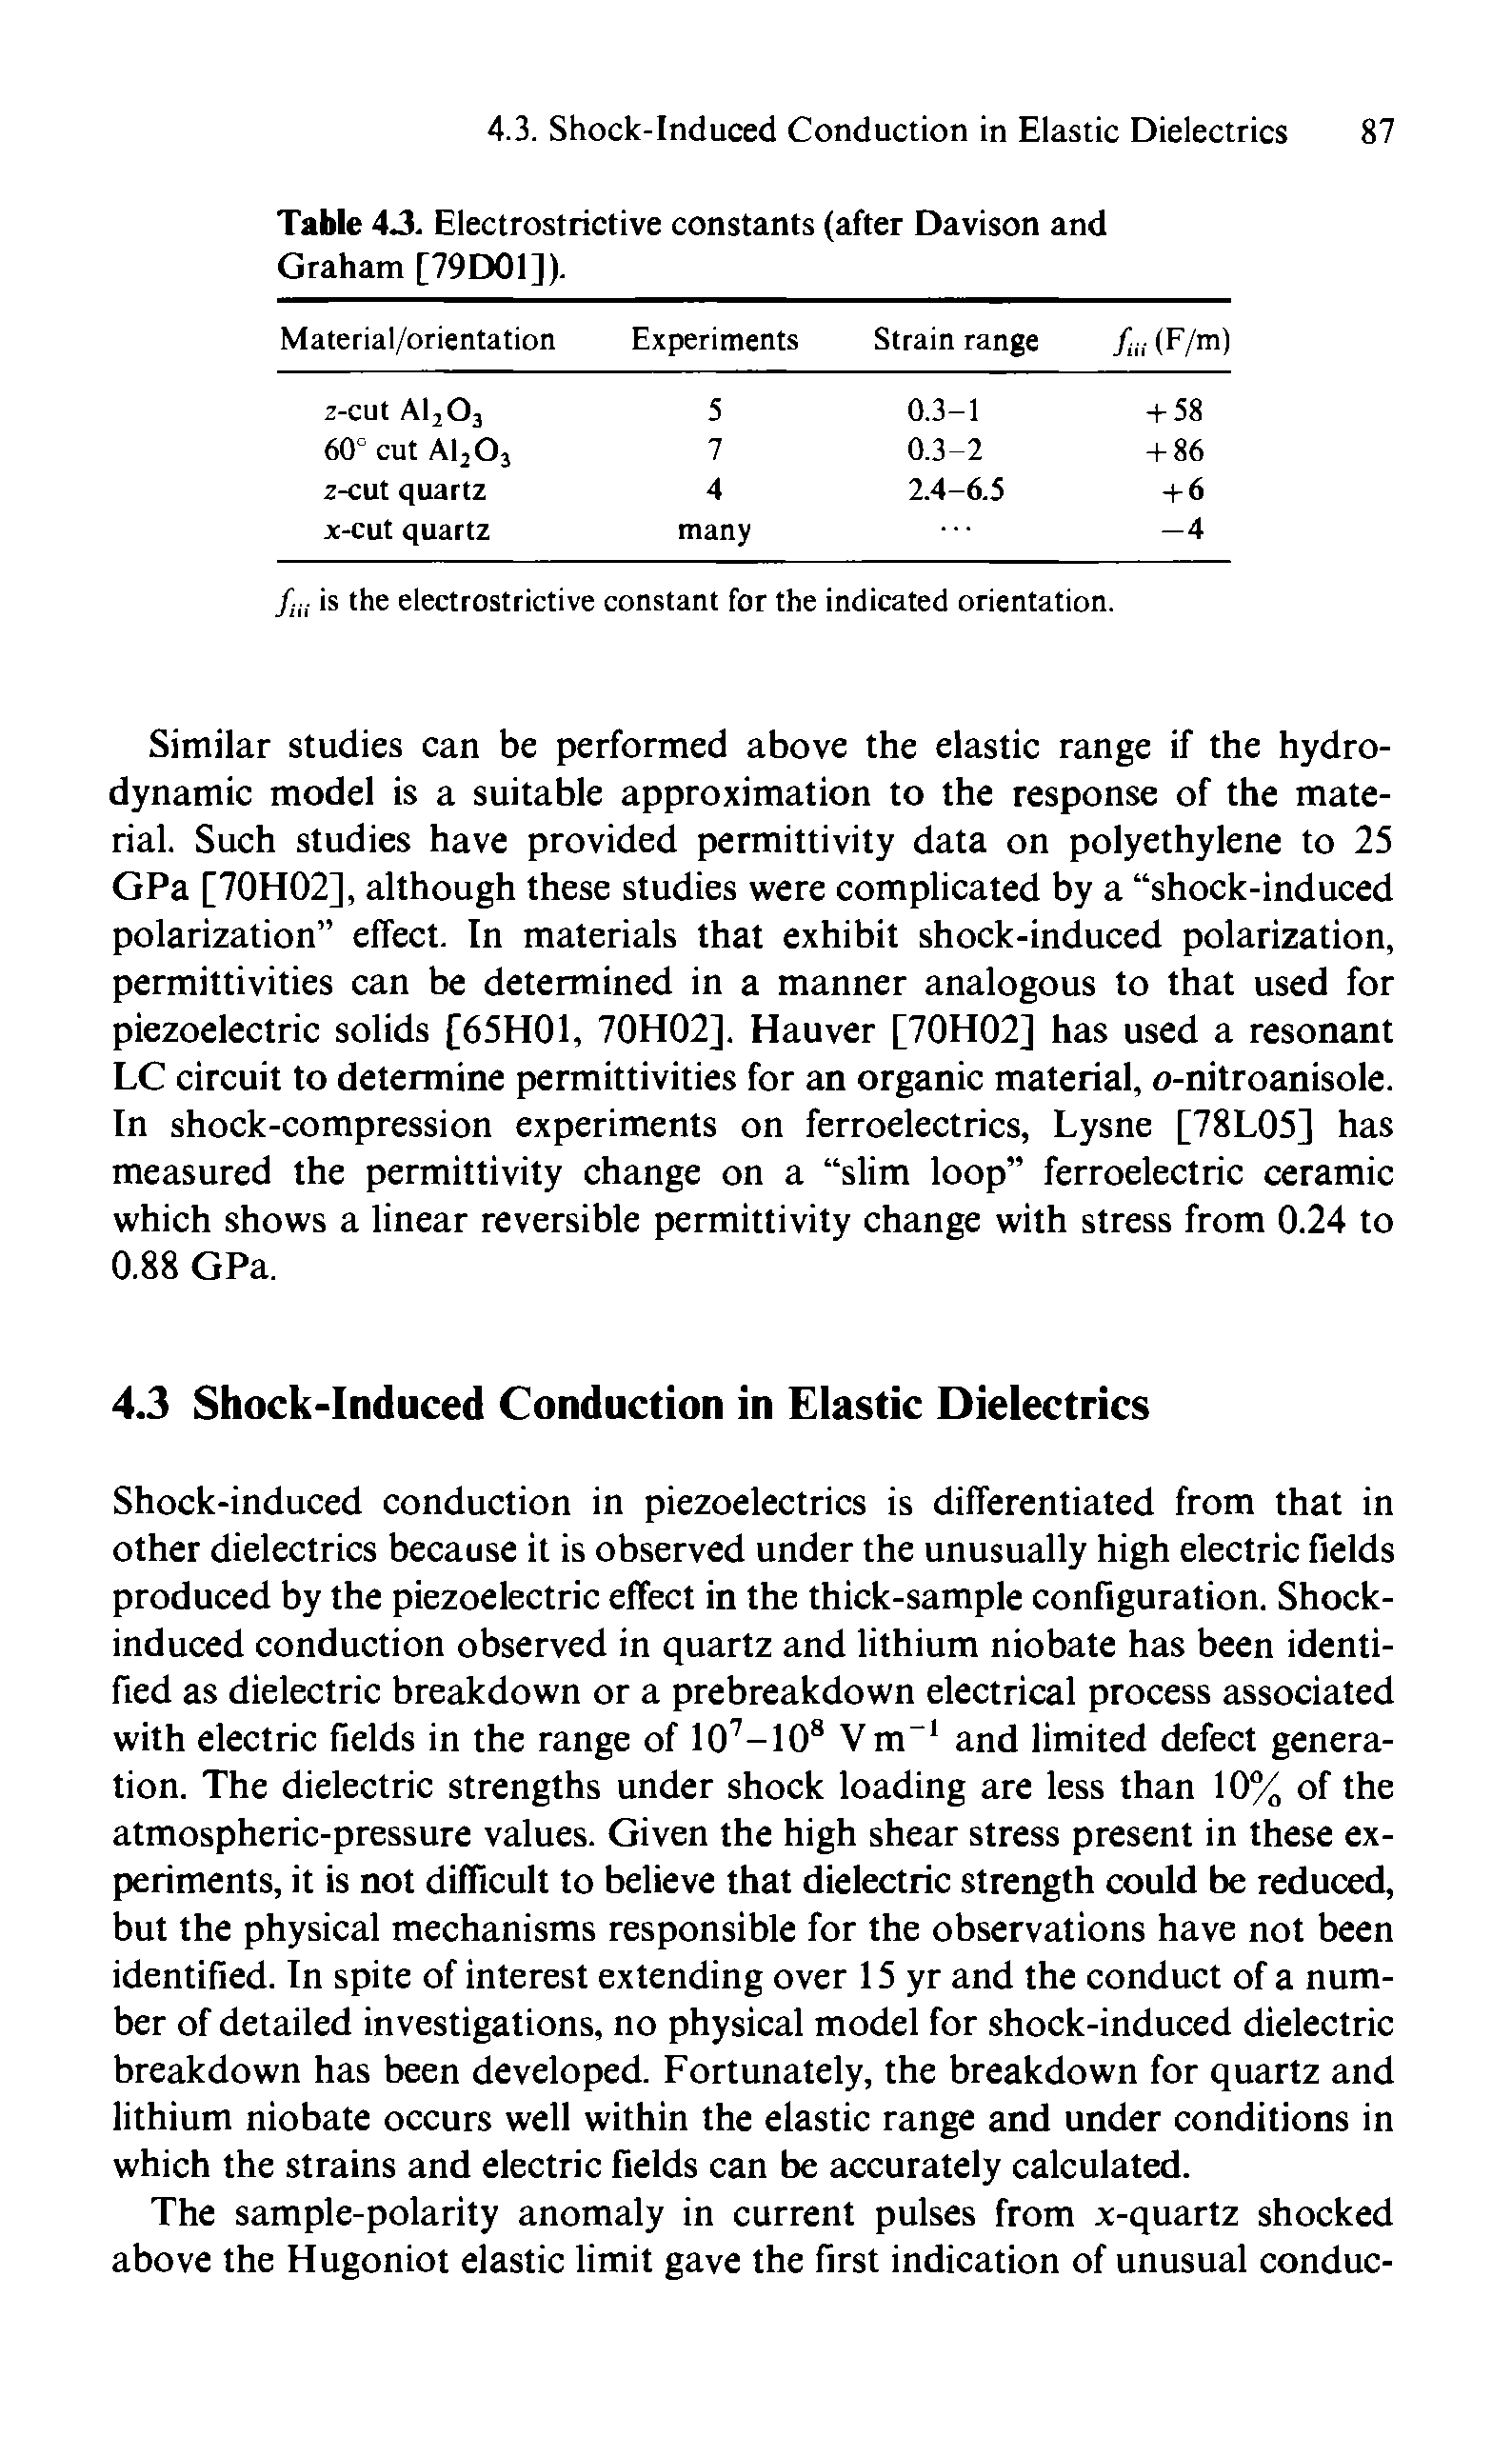 Table 4J. Electrostrictive constants (after Davison and Graham [79D01]).